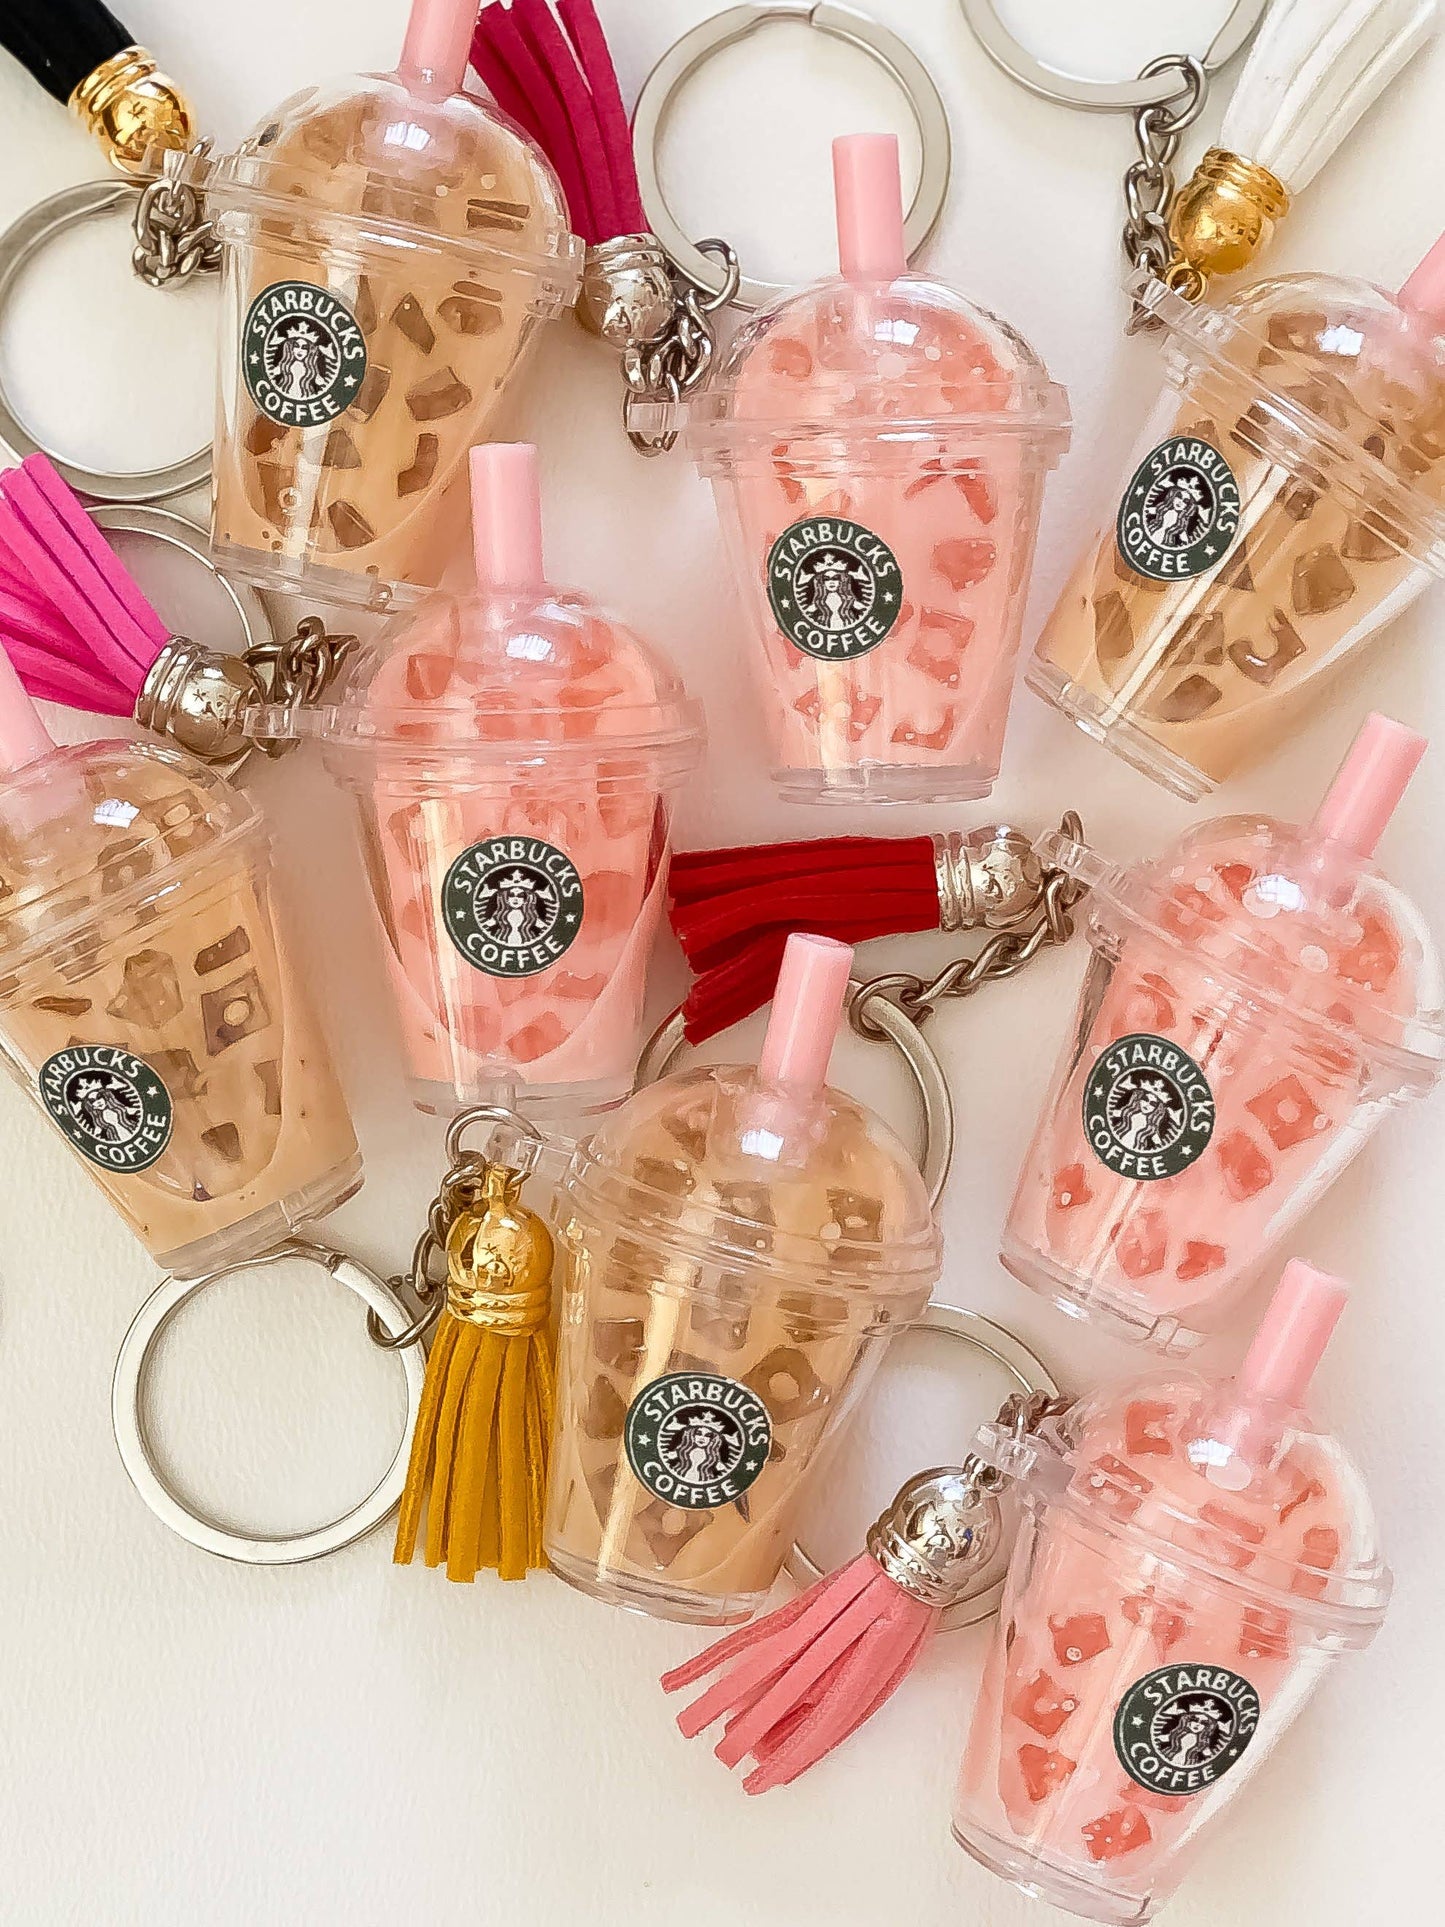 Mini coffee keychain //Starbucks inspired drink keychain//